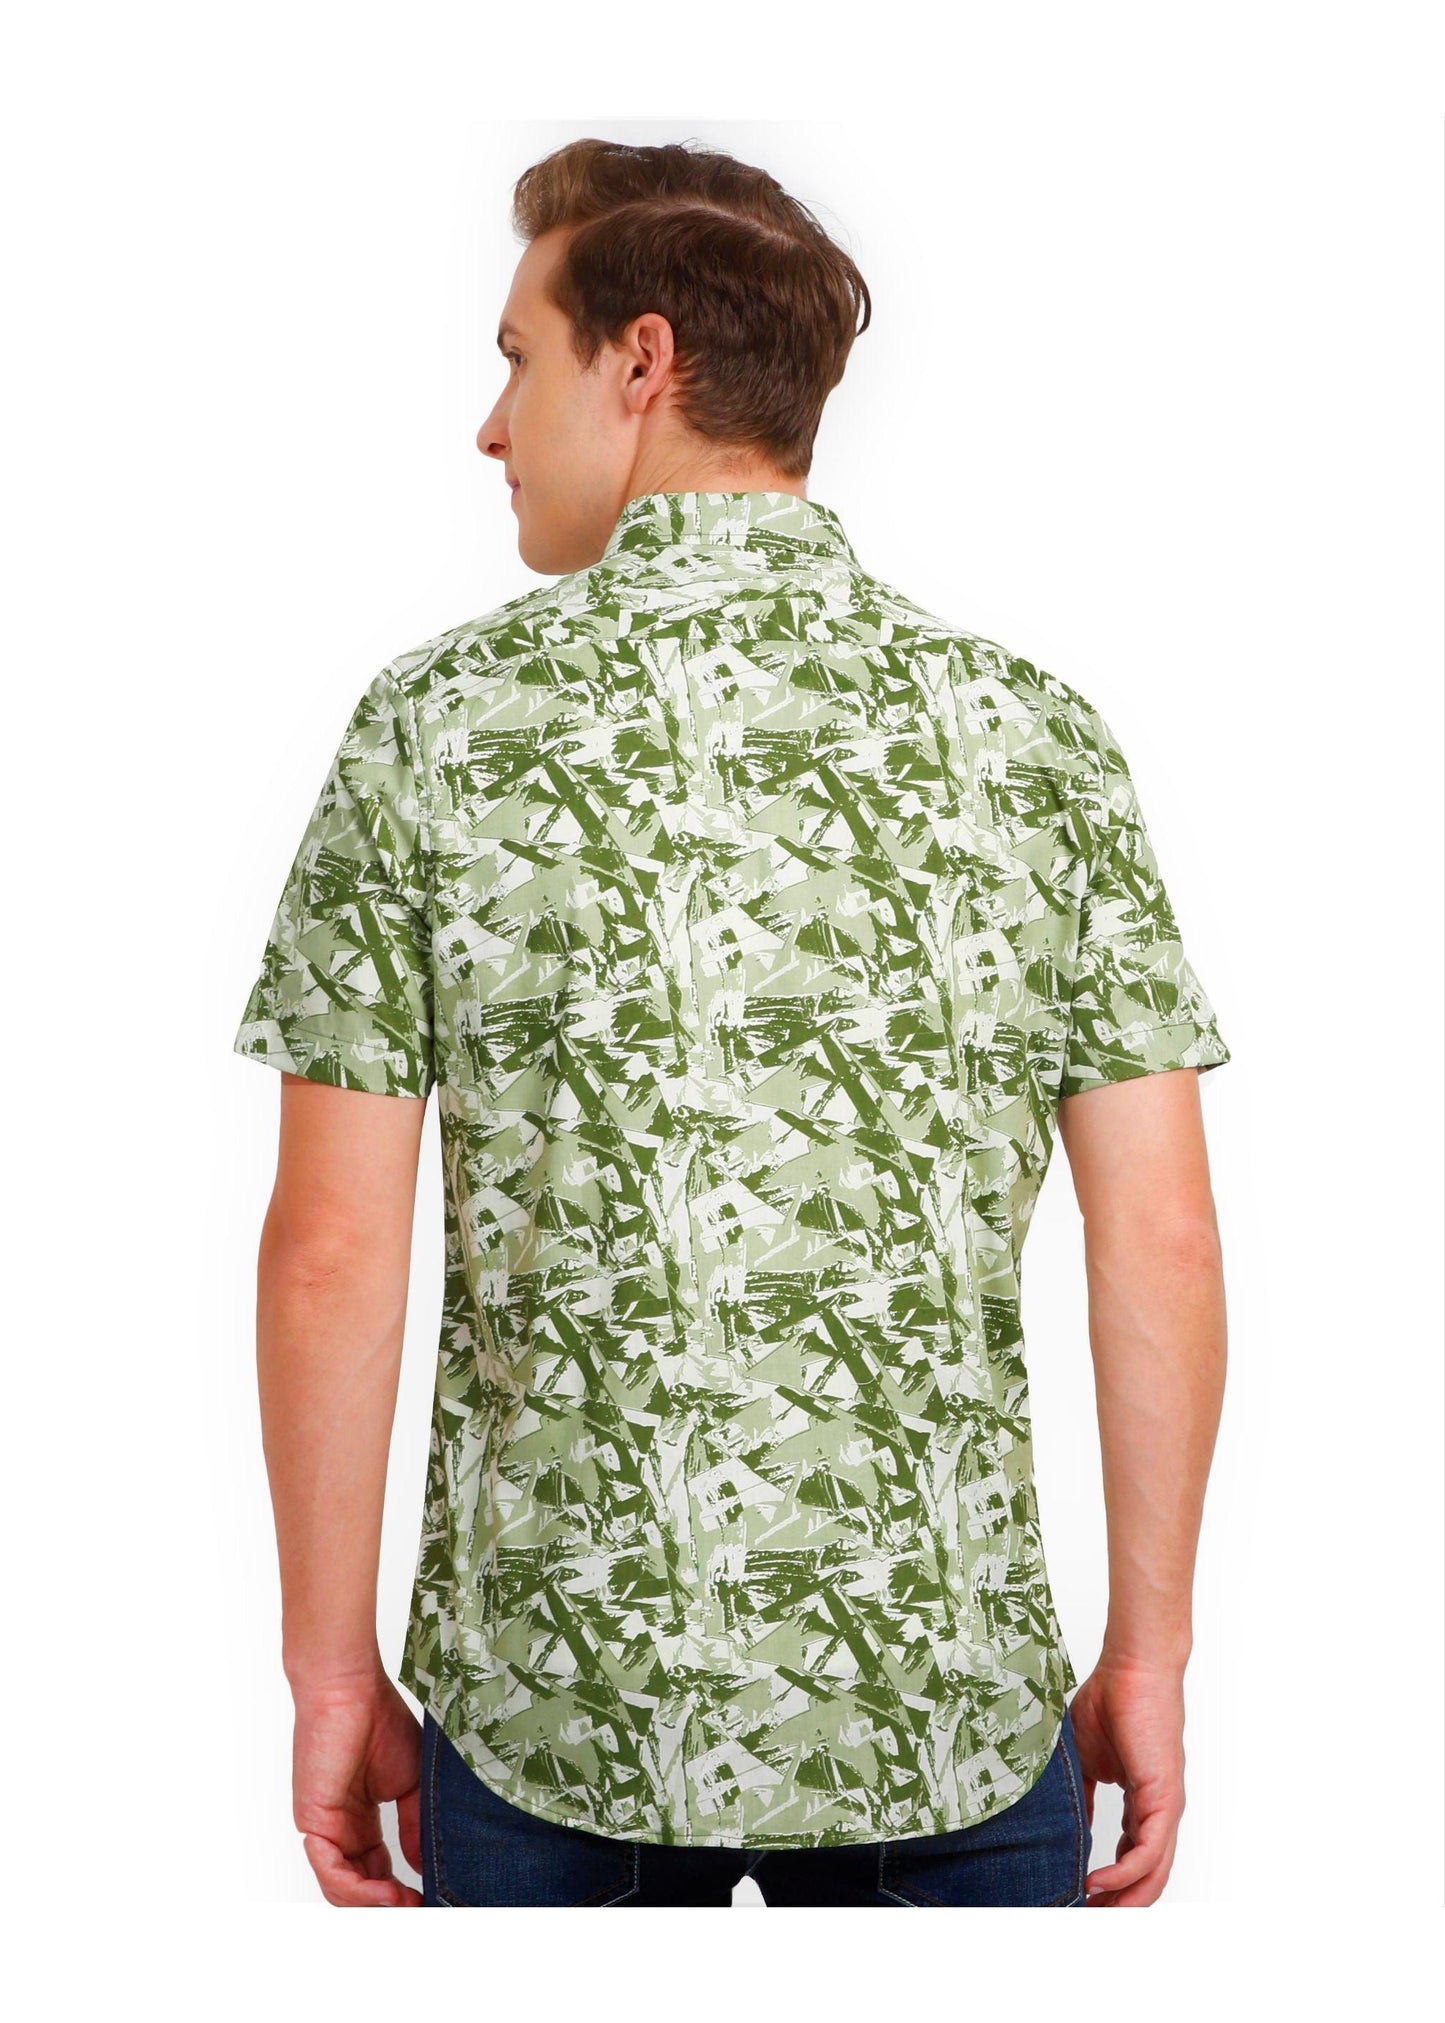 Tusok-mojitoVacation-Printed Shirtimage-Green Zigzag (3)